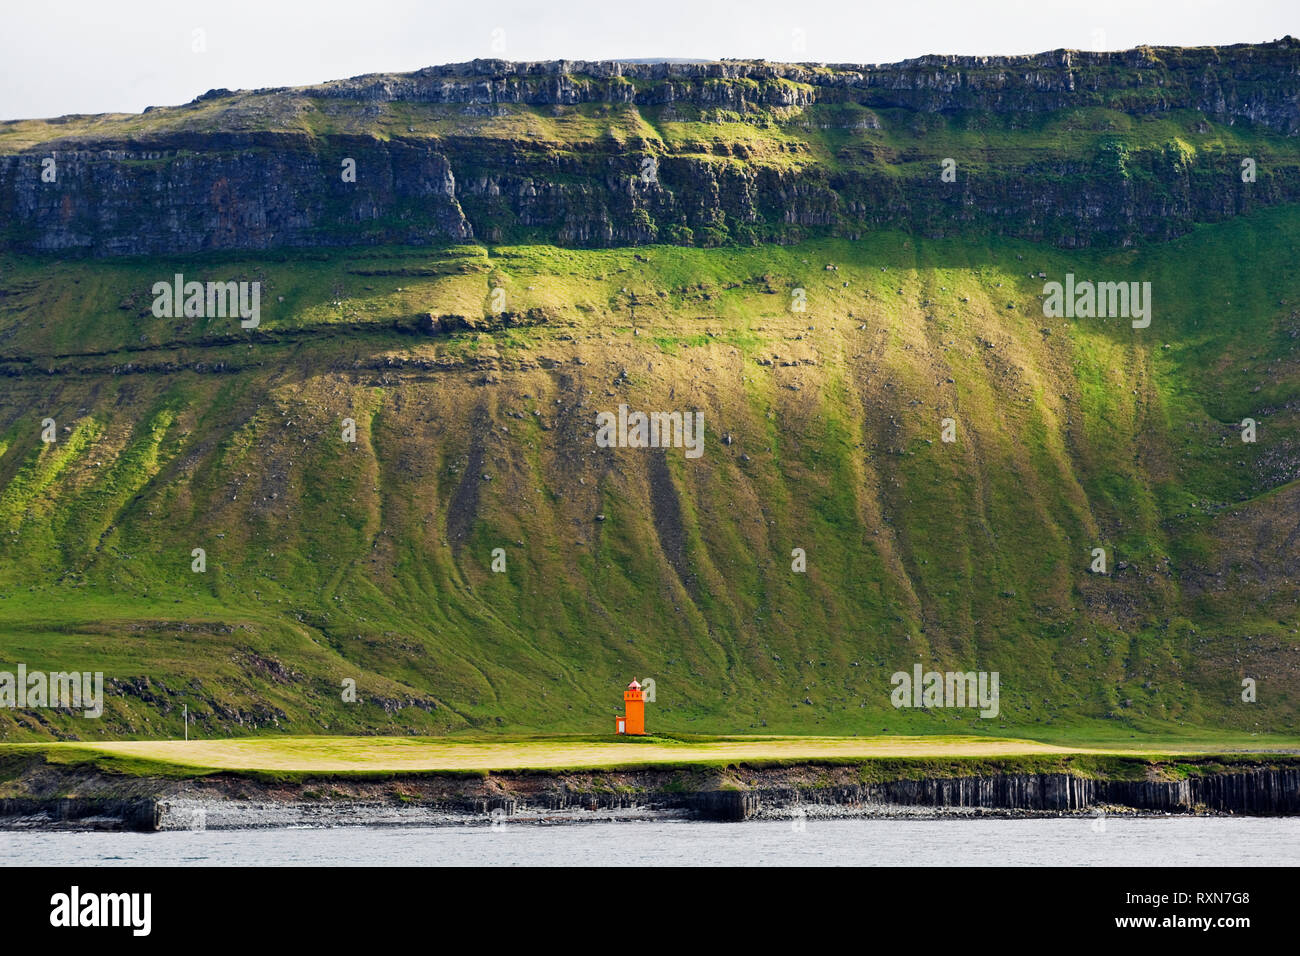 Steep mountainside towering above an orange lighthouse northwest of Grundarfjordur on the Snaefellsnes Peninsula, Iceland Stock Photo